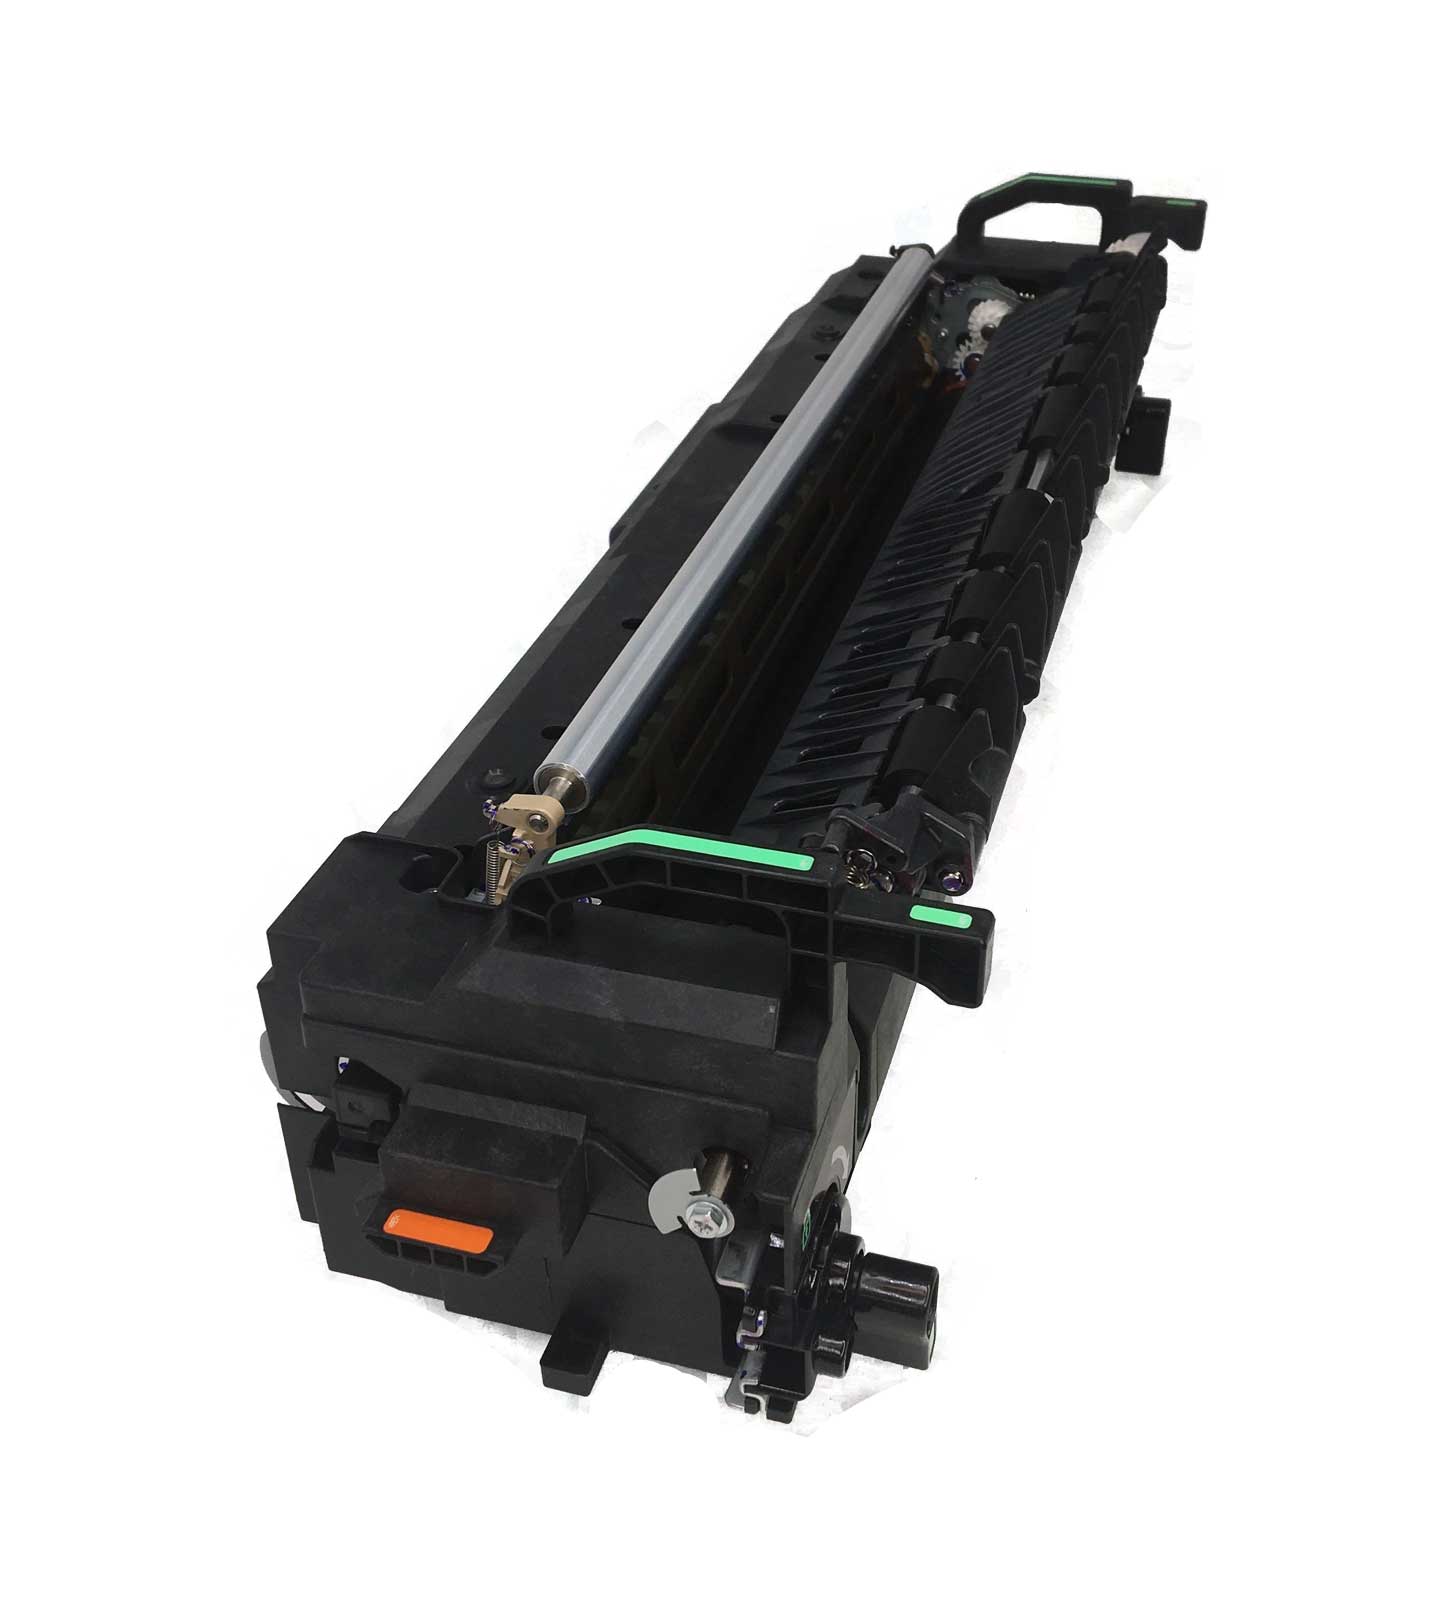 icolor 800 fuser transfer printer